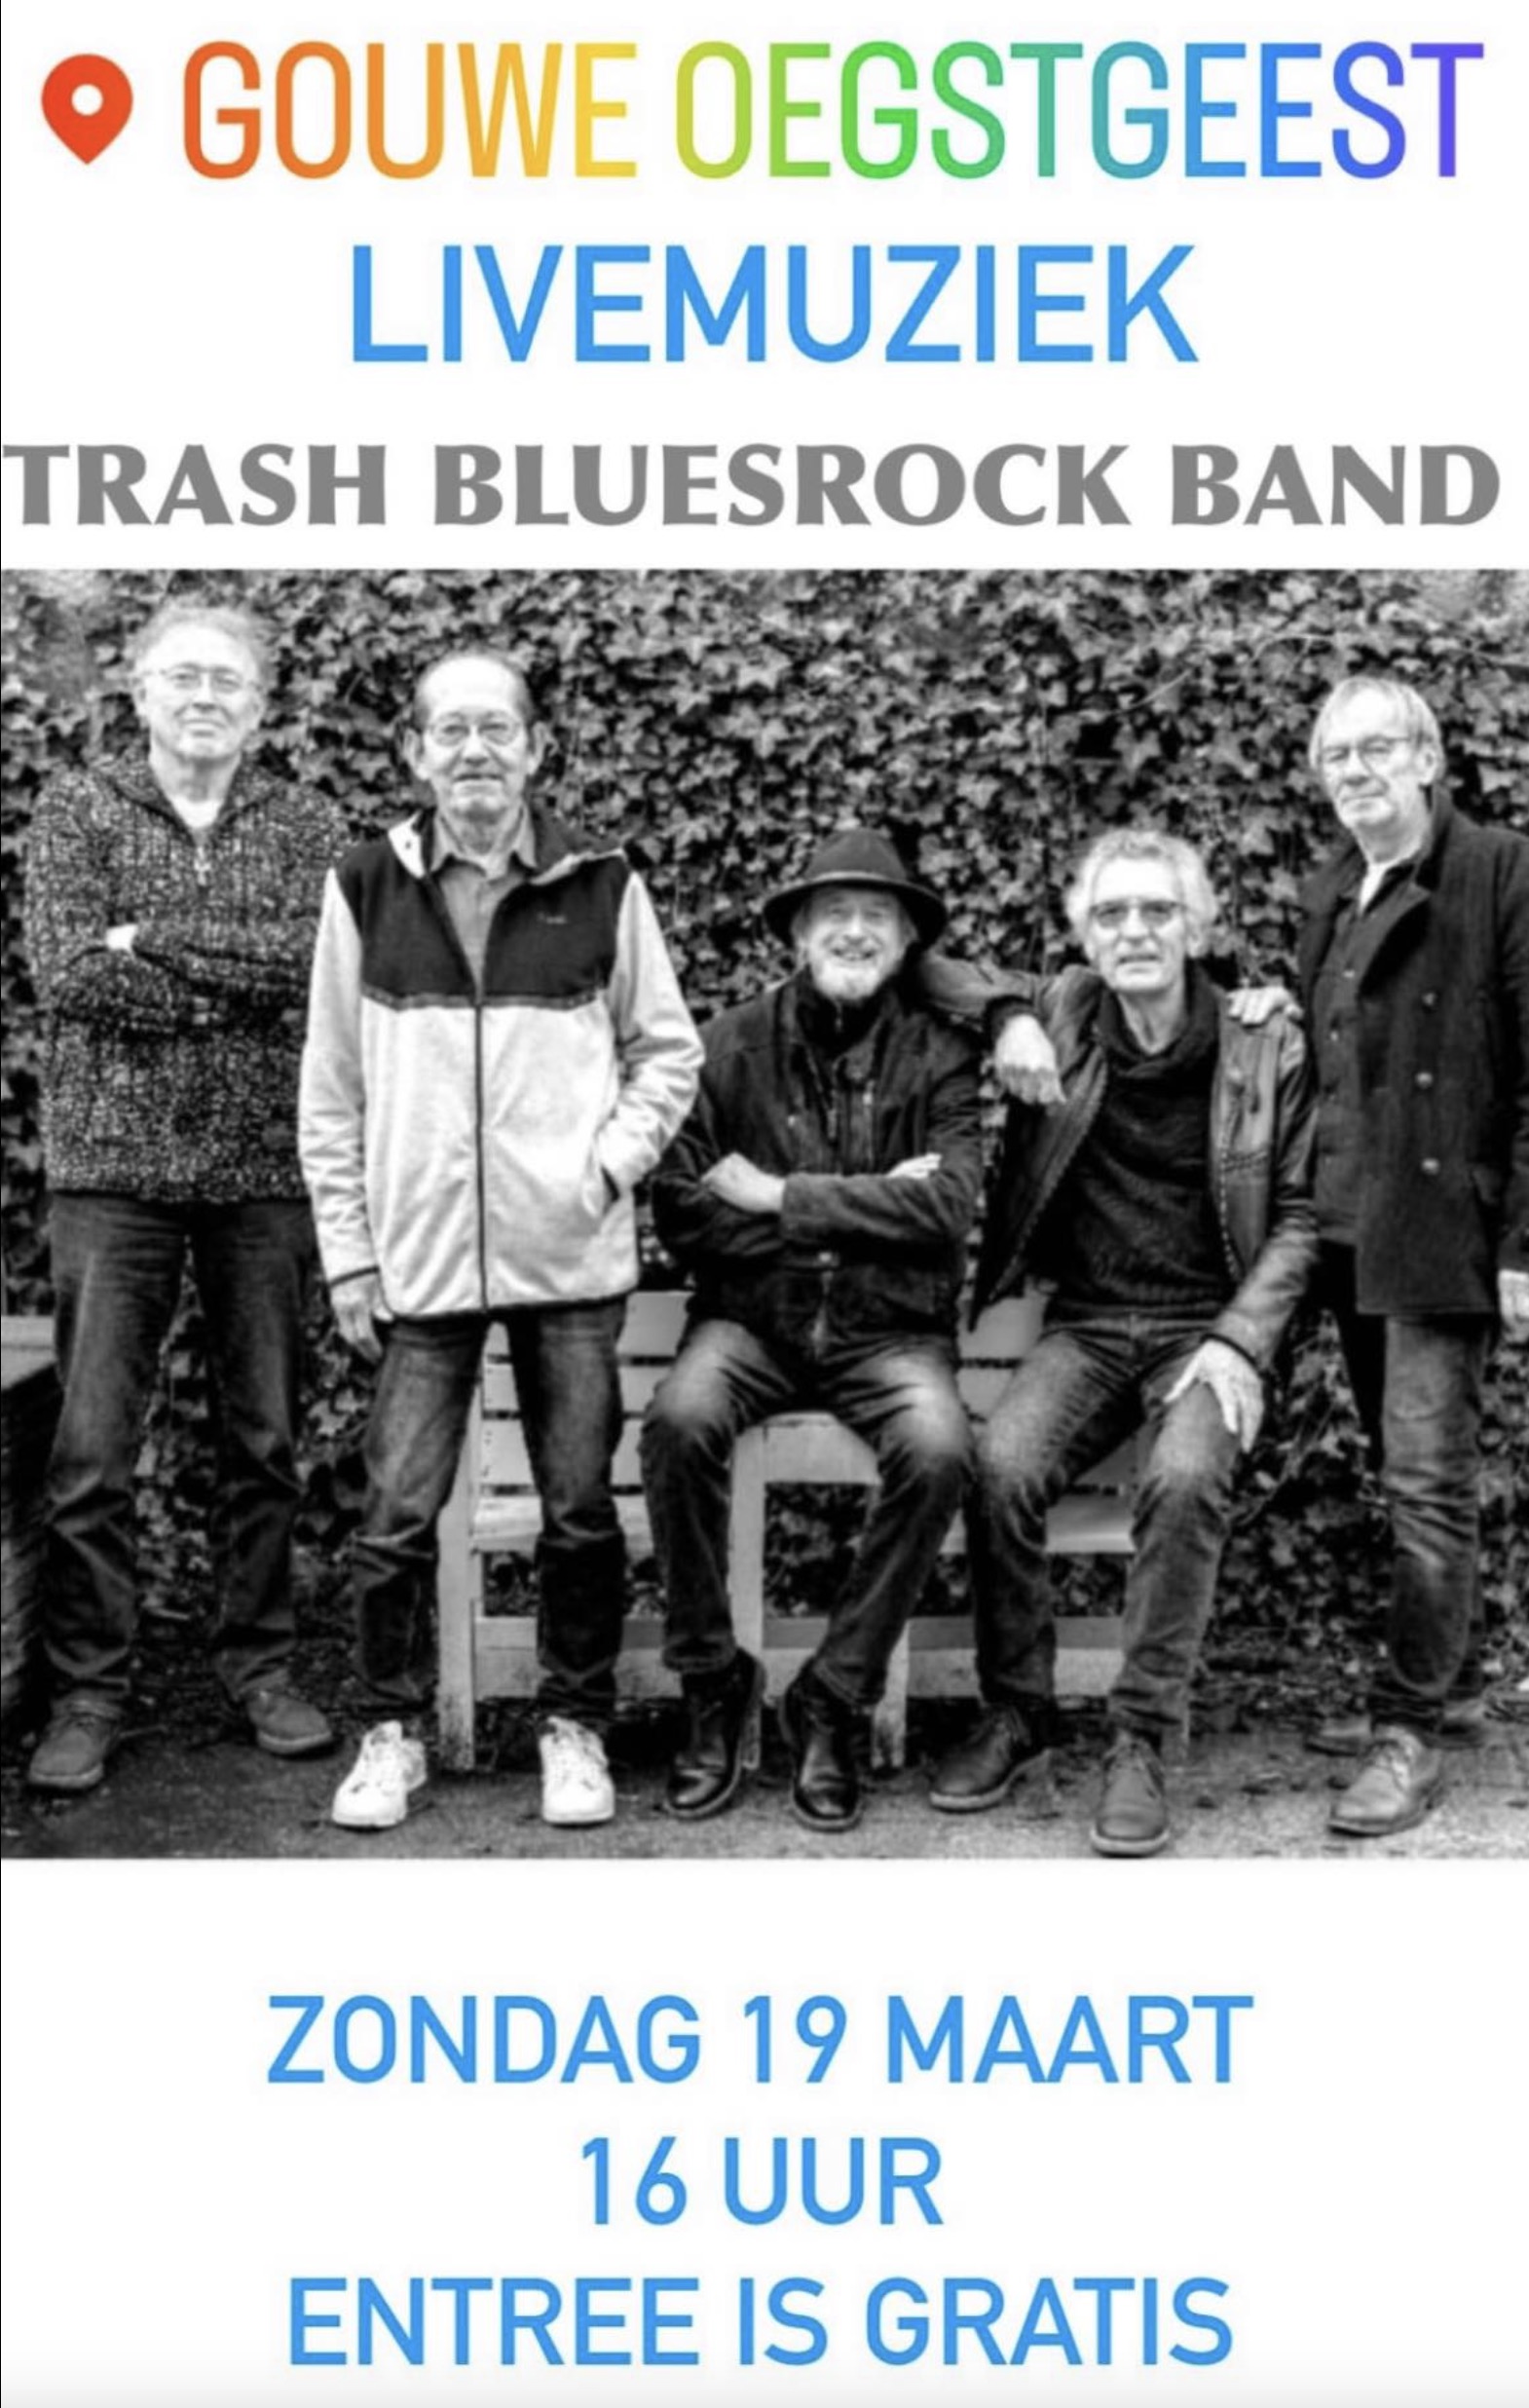 Trash Bluesrock Band @ De Gouwe